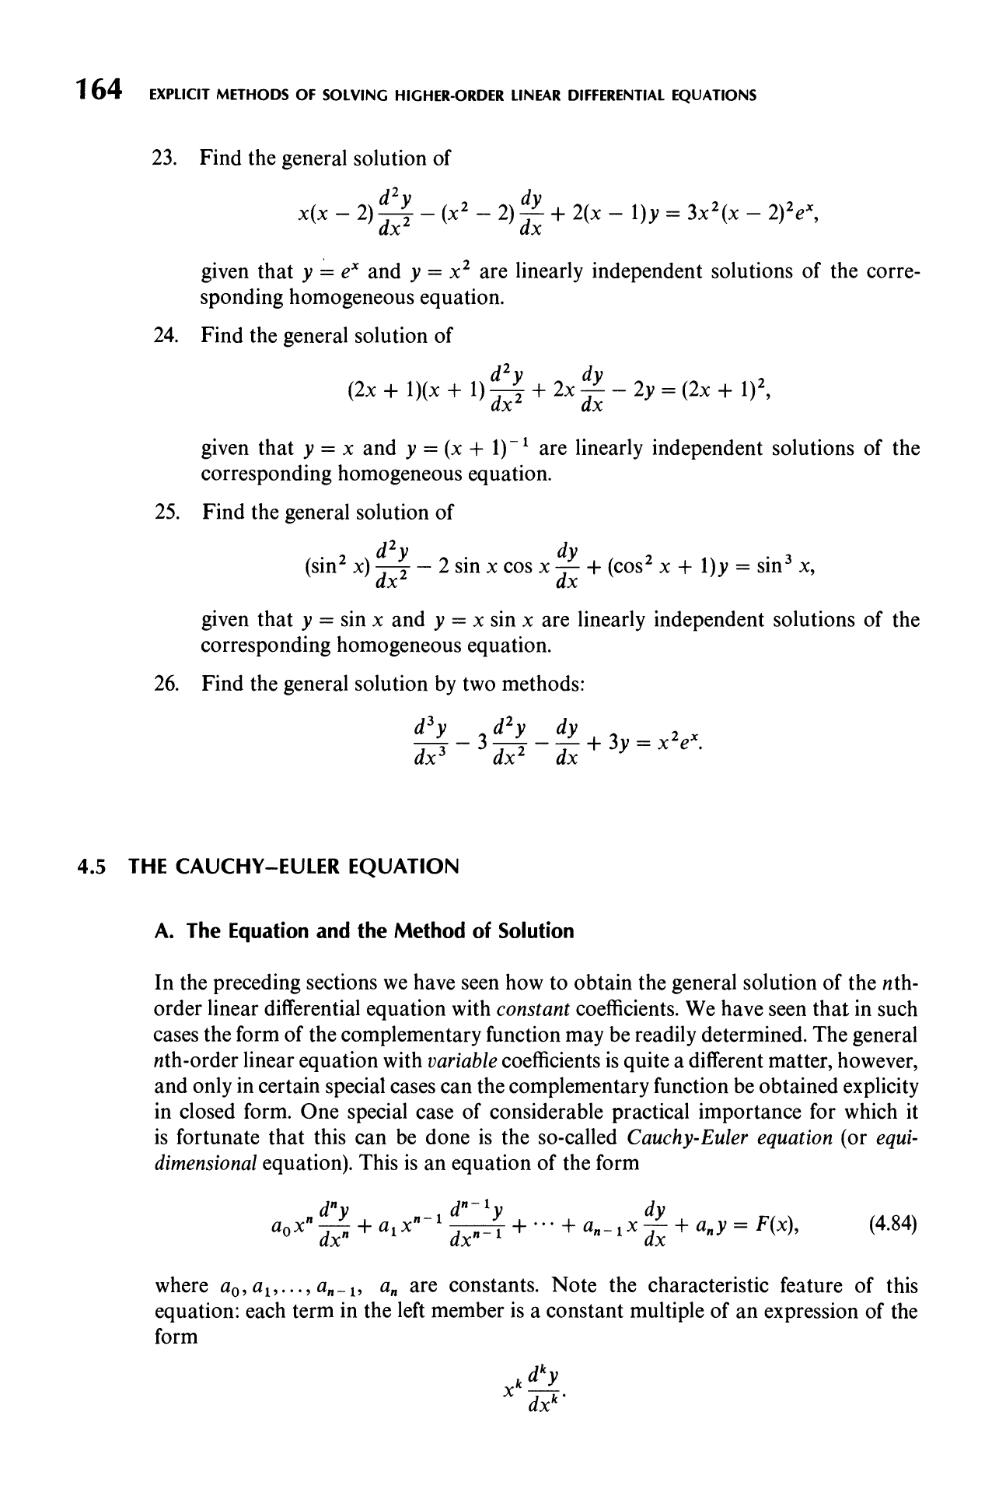 4.5  The Cauchy-Euler Equation